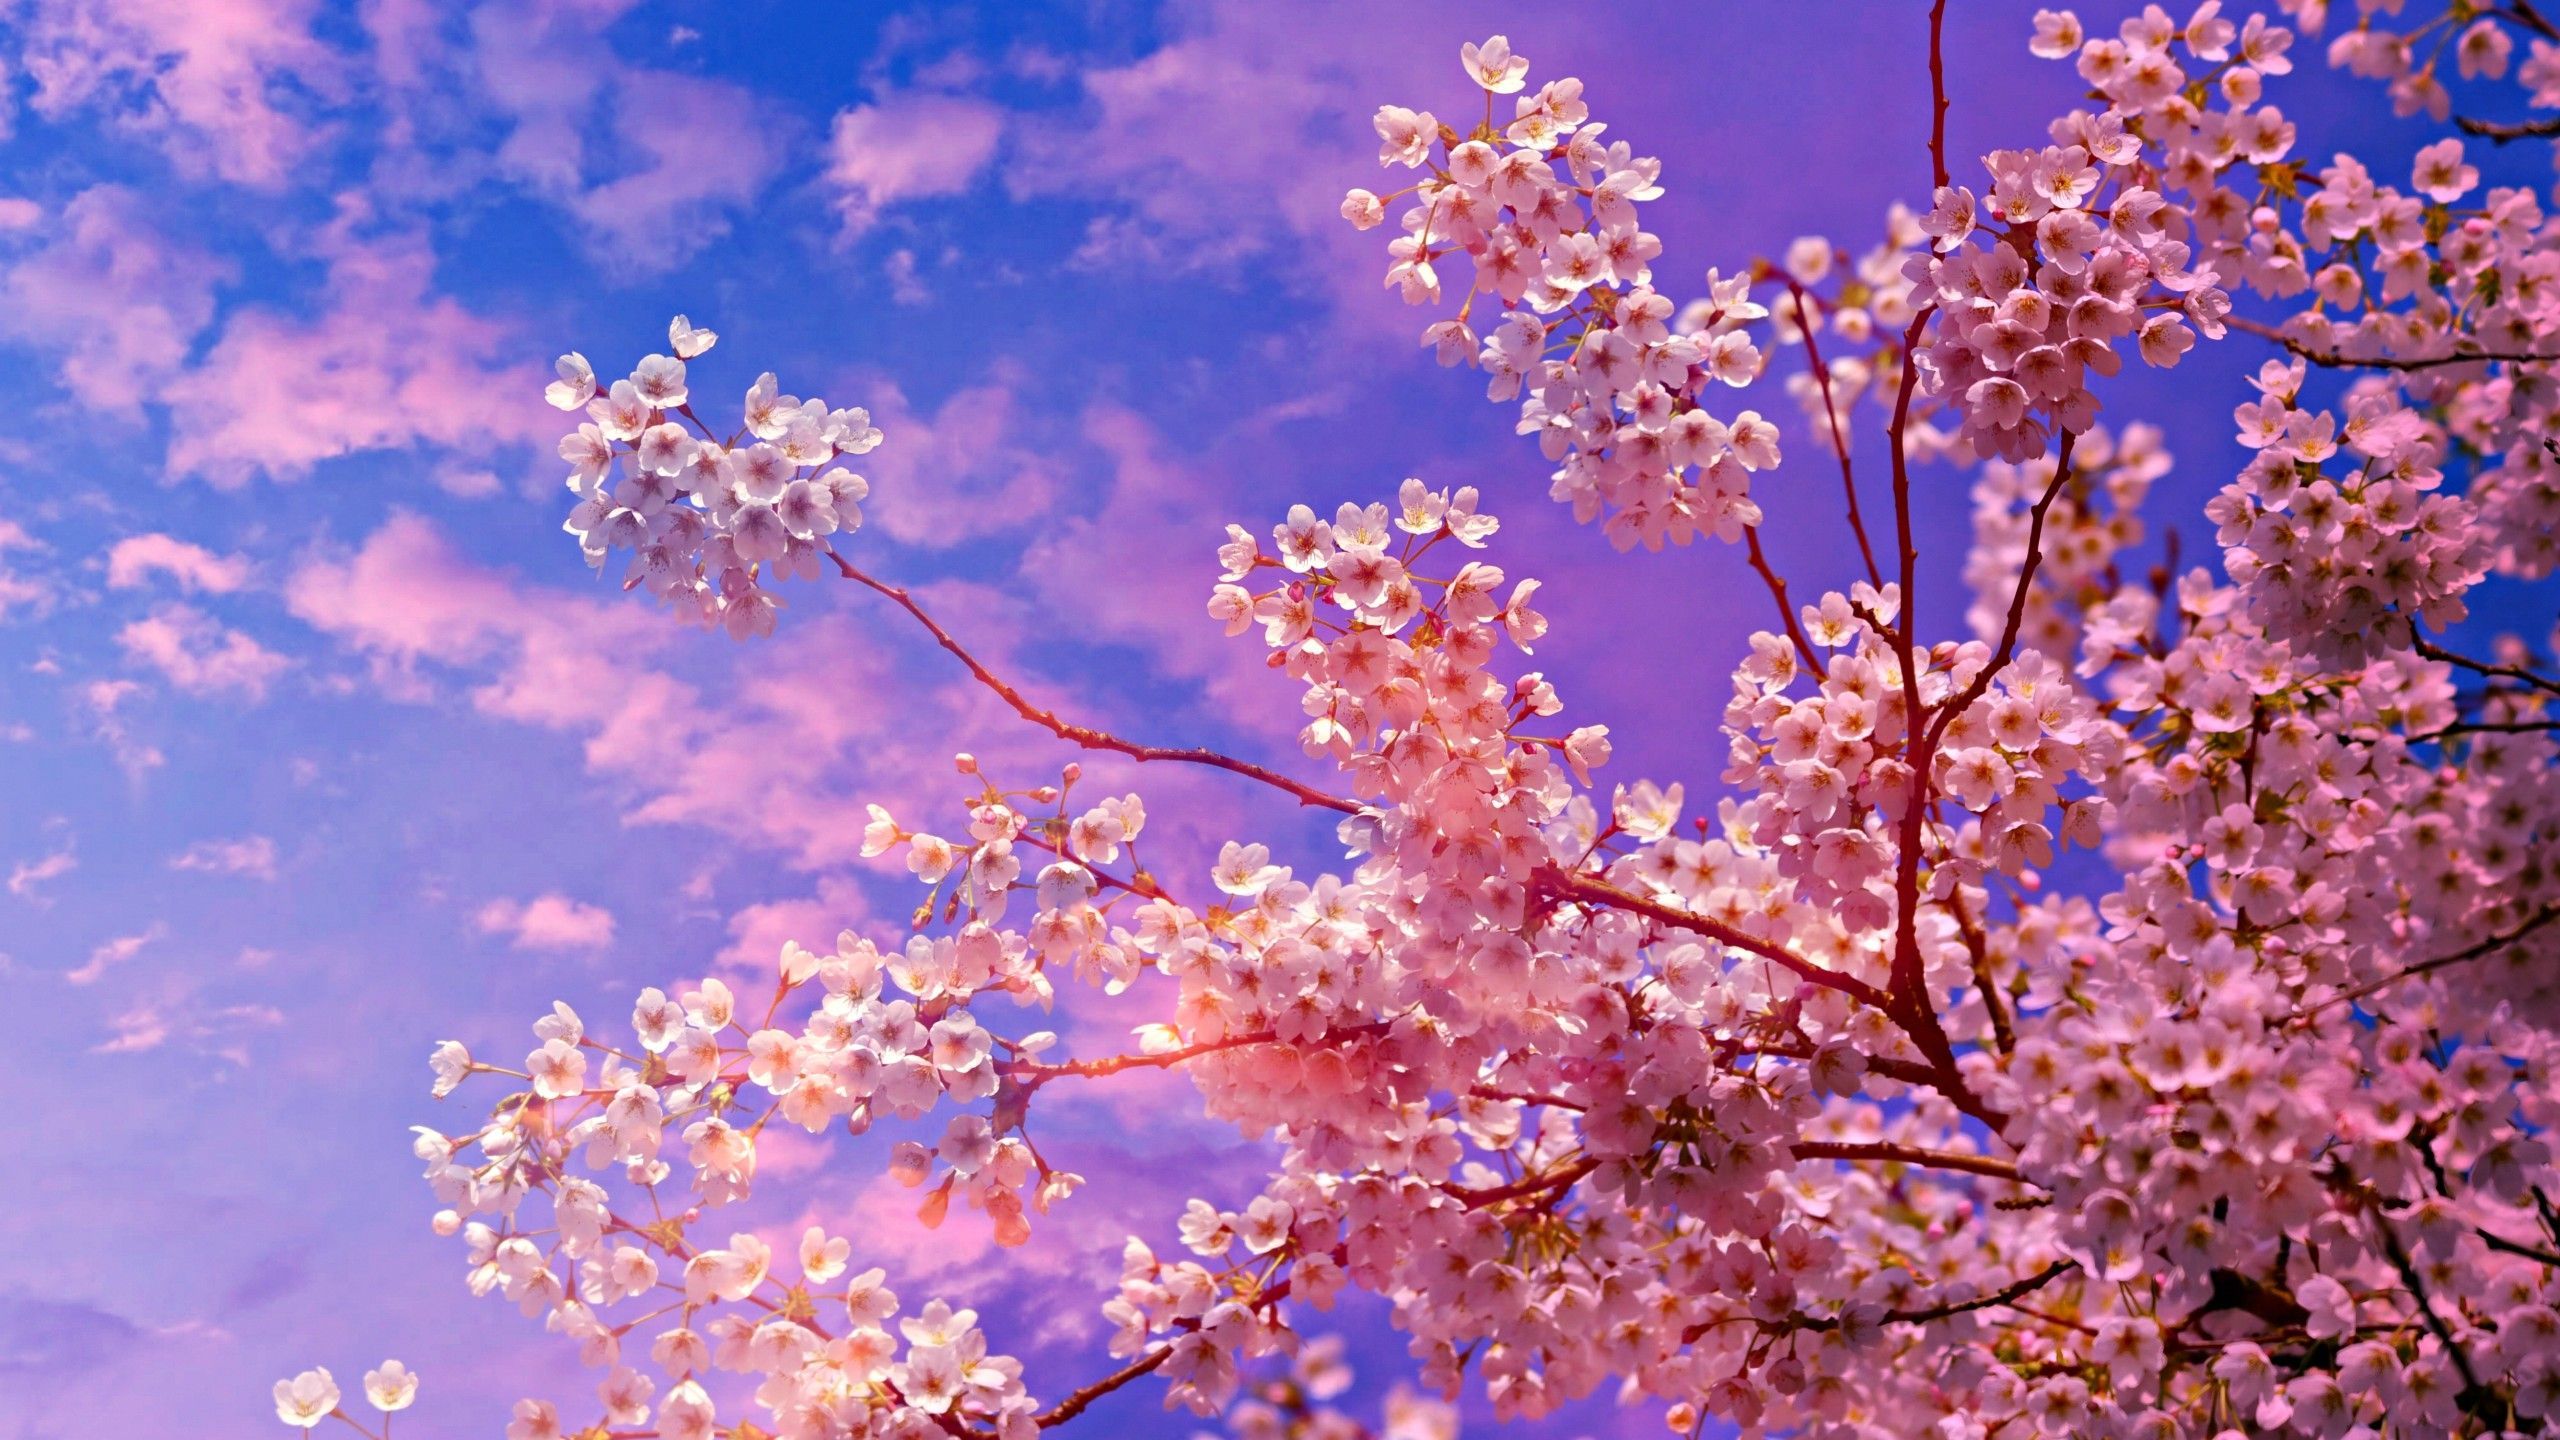 Cherry Blossom Wallpaper Free 2560x1440 Cherry